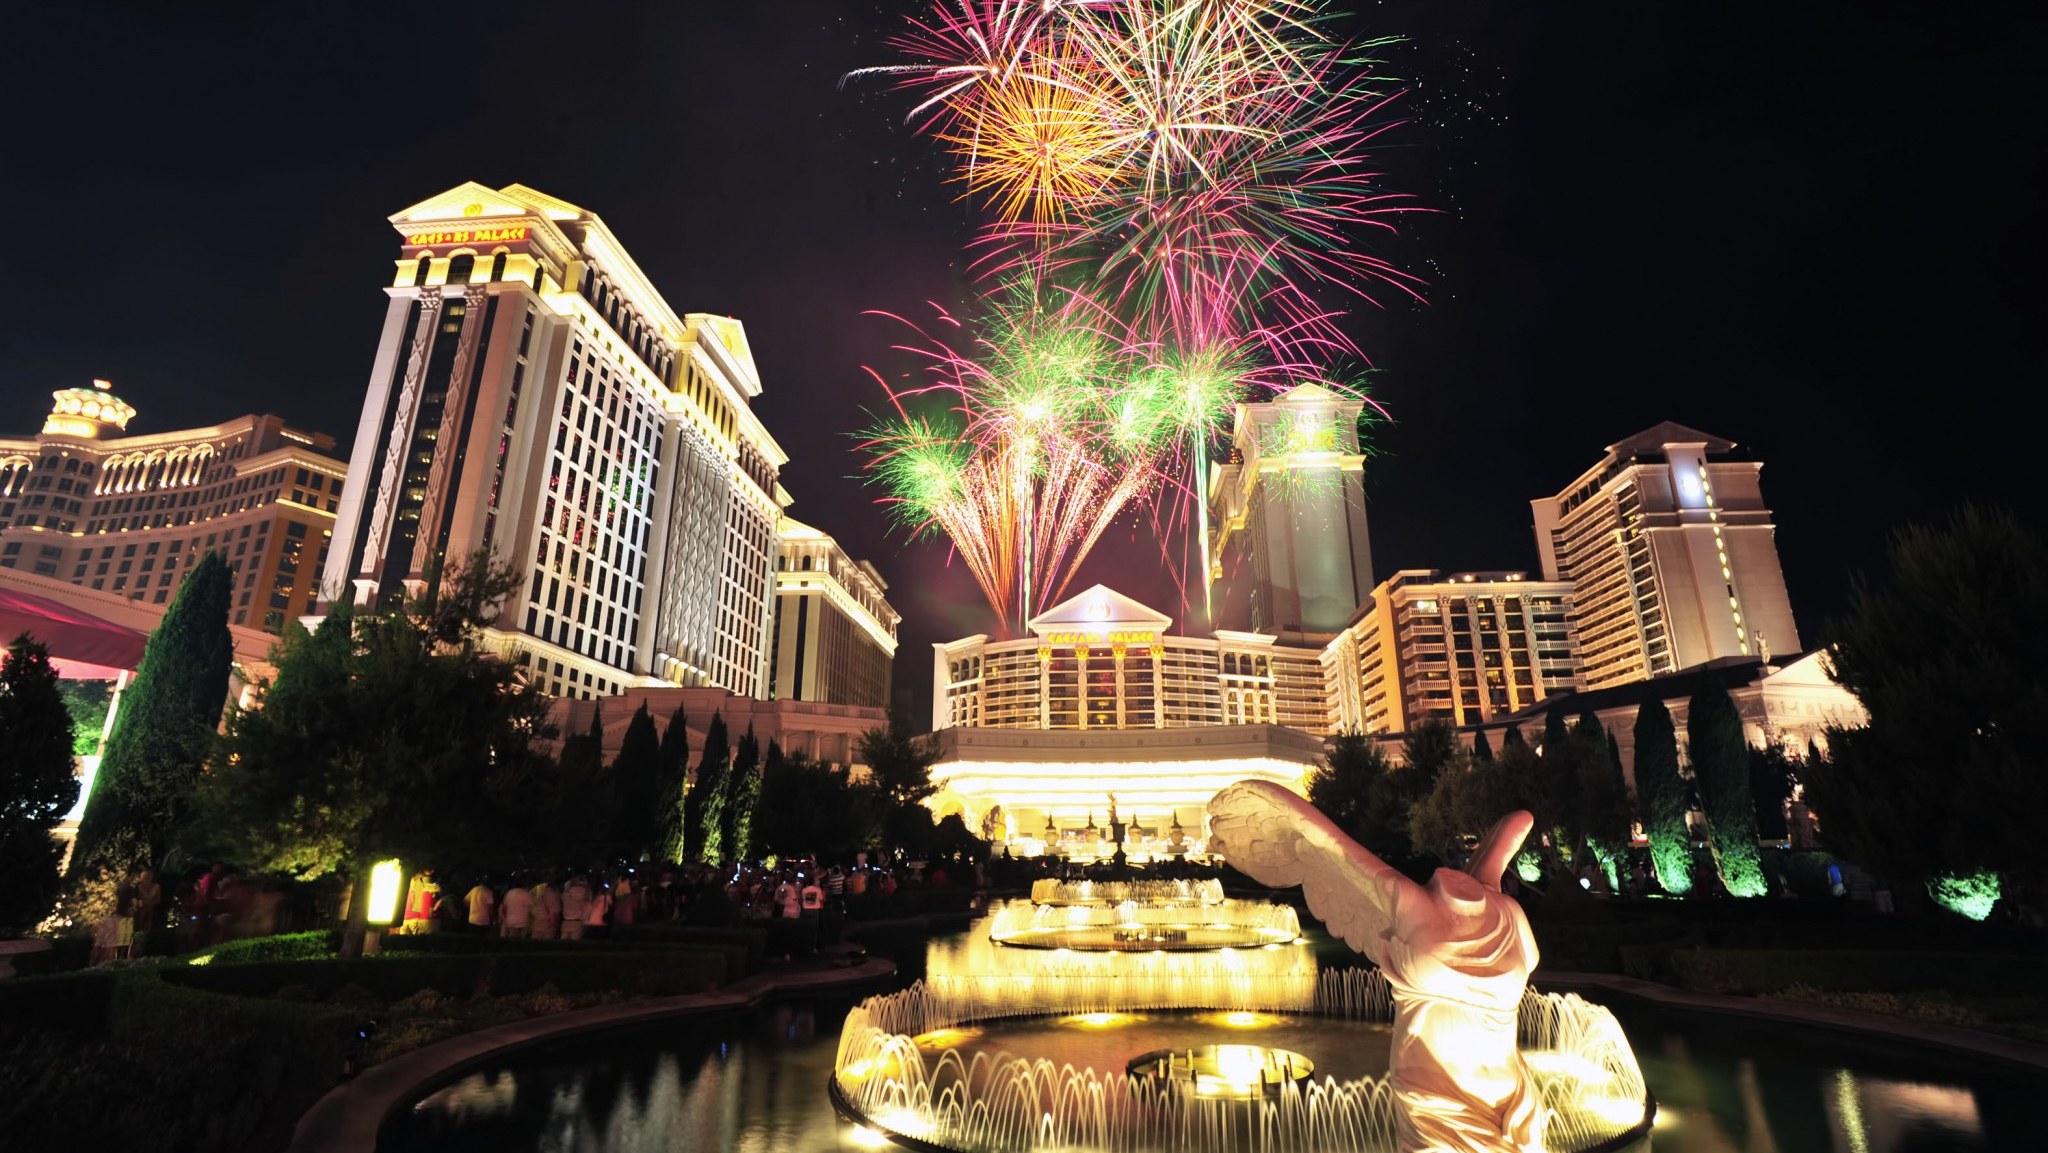 will gun lake casino have fireworks 2019